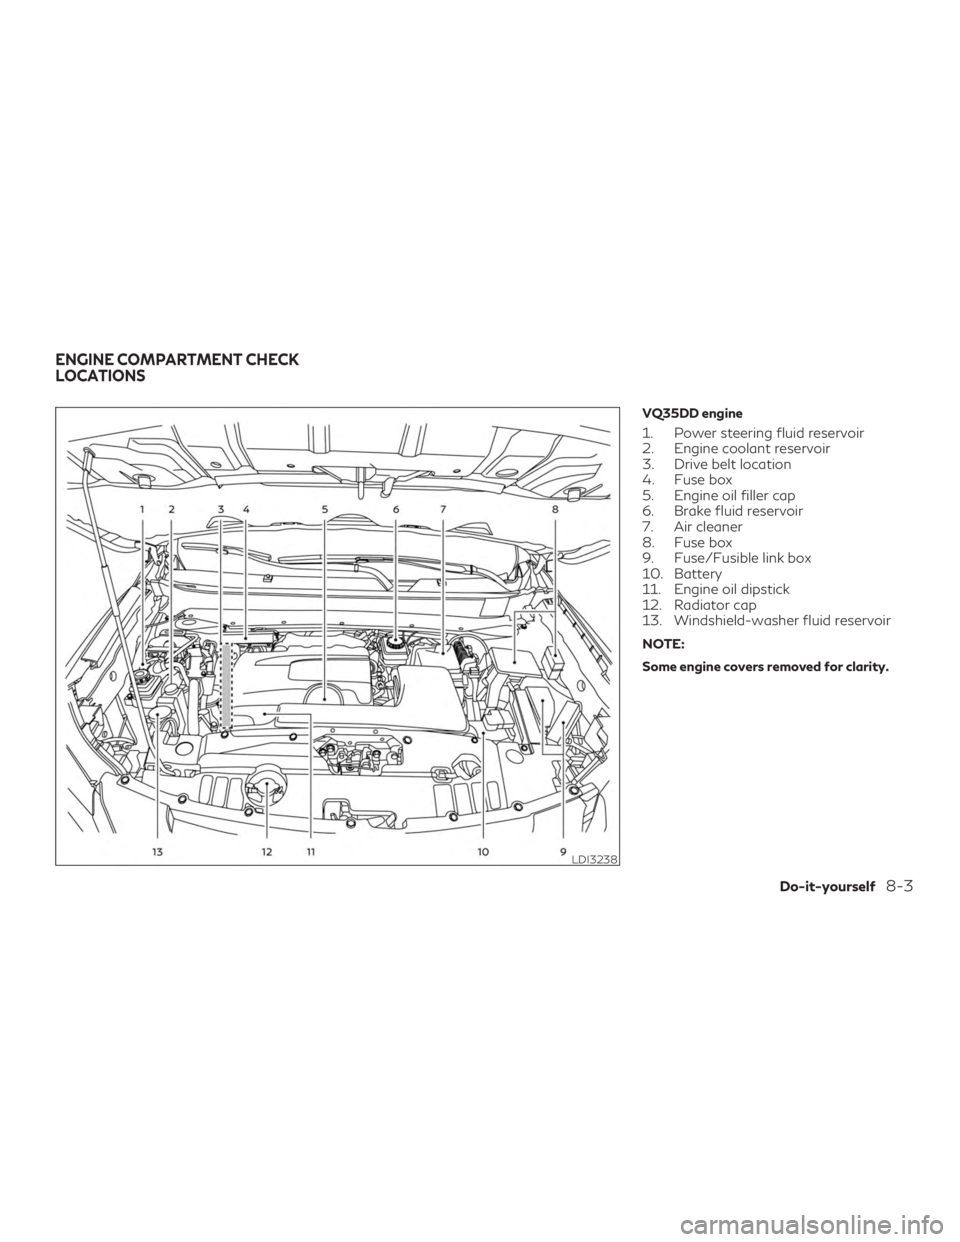 INFINITI QX60 2020  Owners Manual VQ35DD engine
1. Power steering fluid reservoir
2. Engine coolant reservoir
3. Drive belt location
4. Fuse box
5. Engine oil filler cap
6. Brake fluid reservoir
7. Air cleaner
8. Fuse box
9. Fuse/Fusi